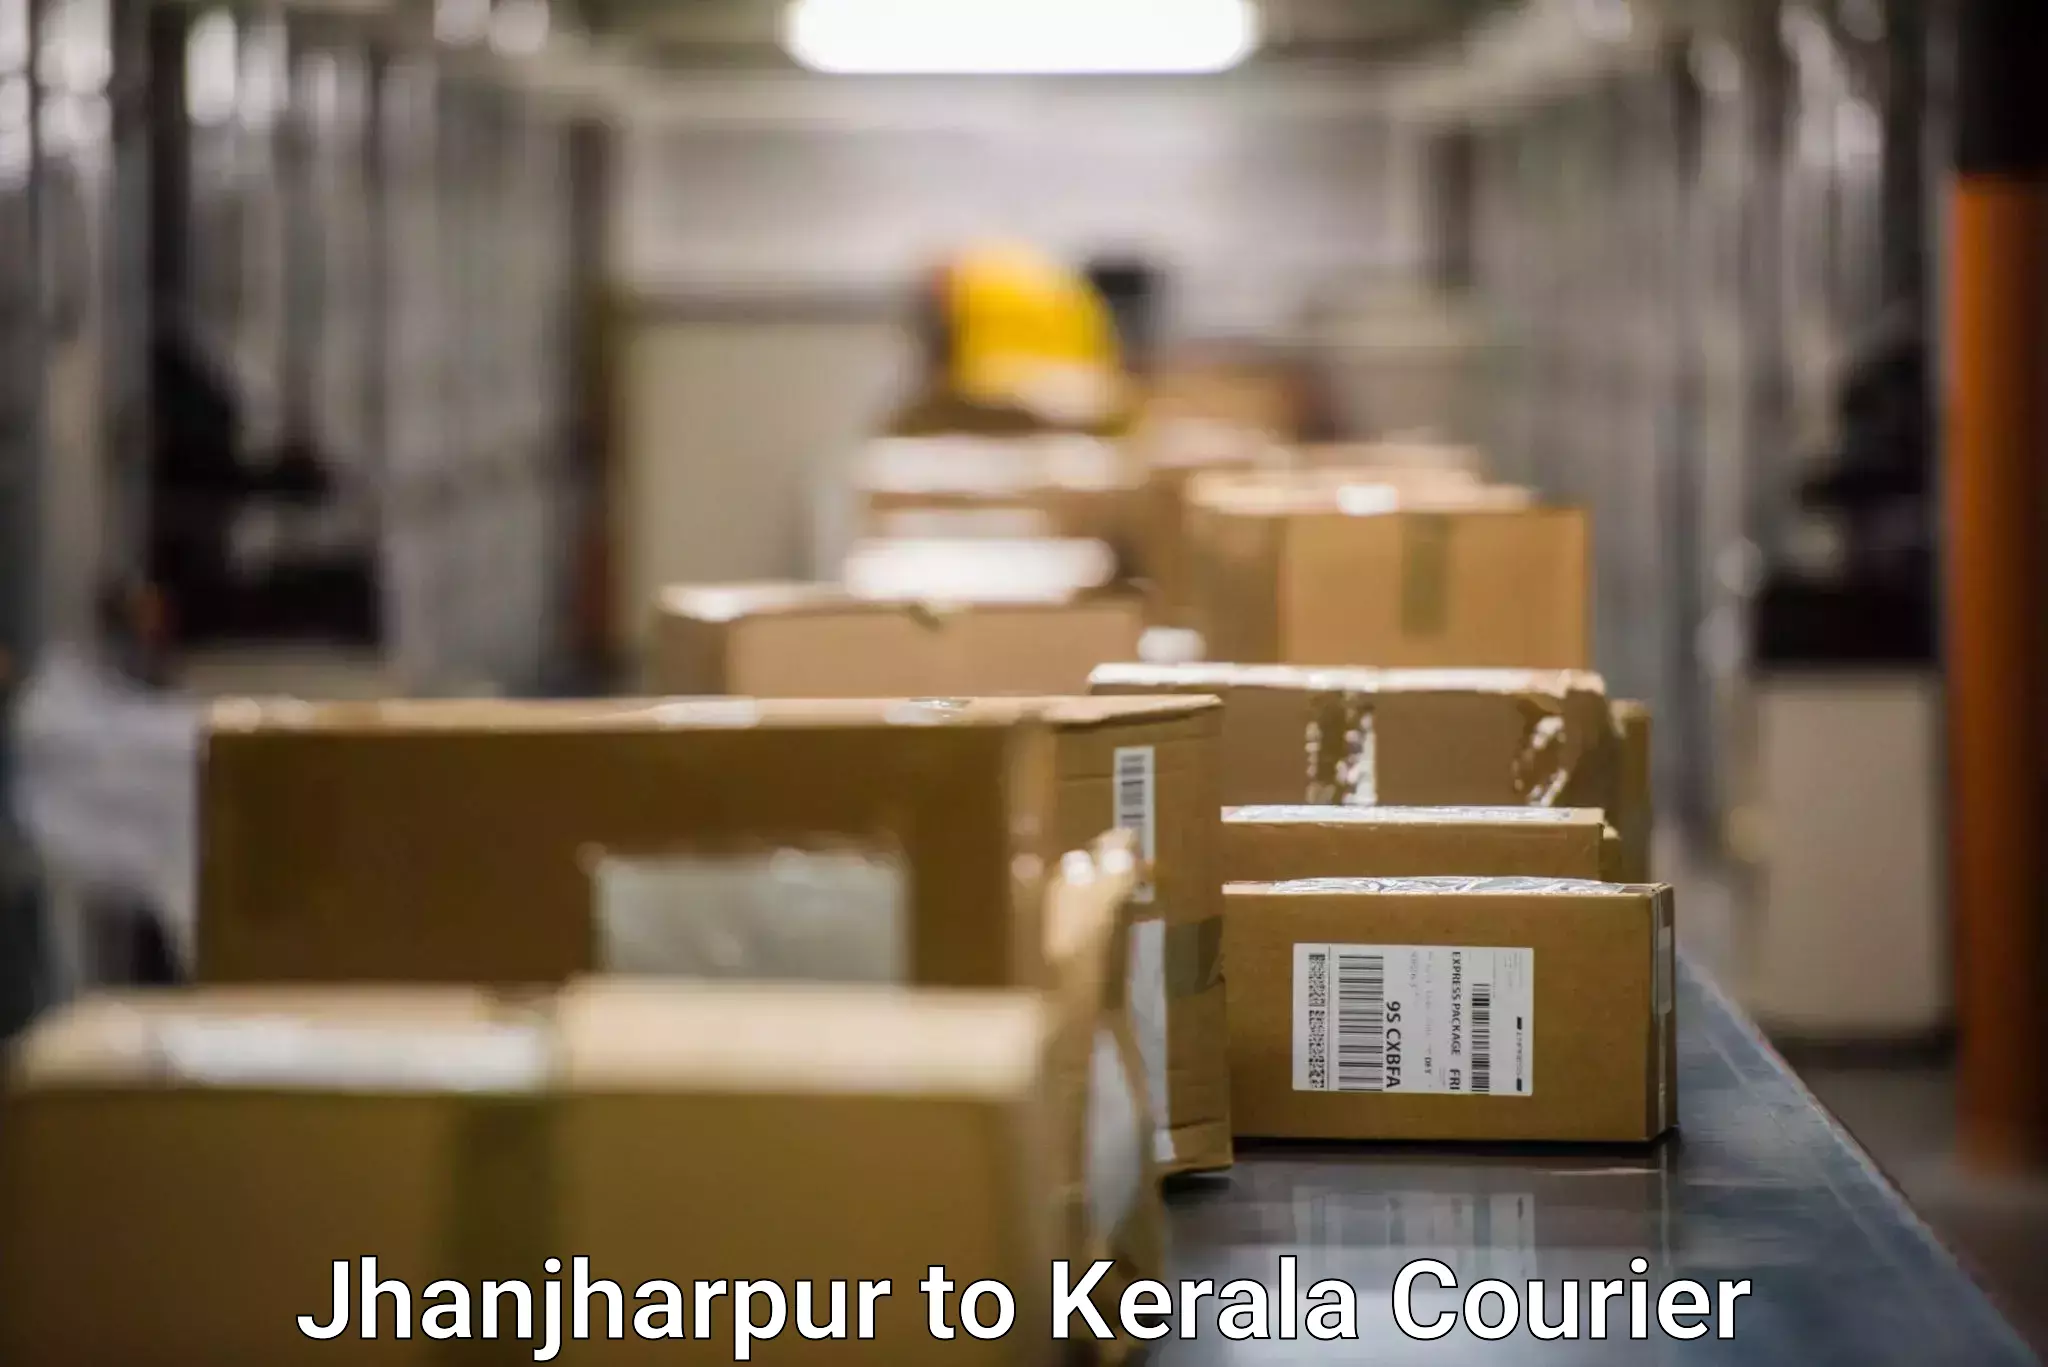 Courier service partnerships Jhanjharpur to Kakkayam